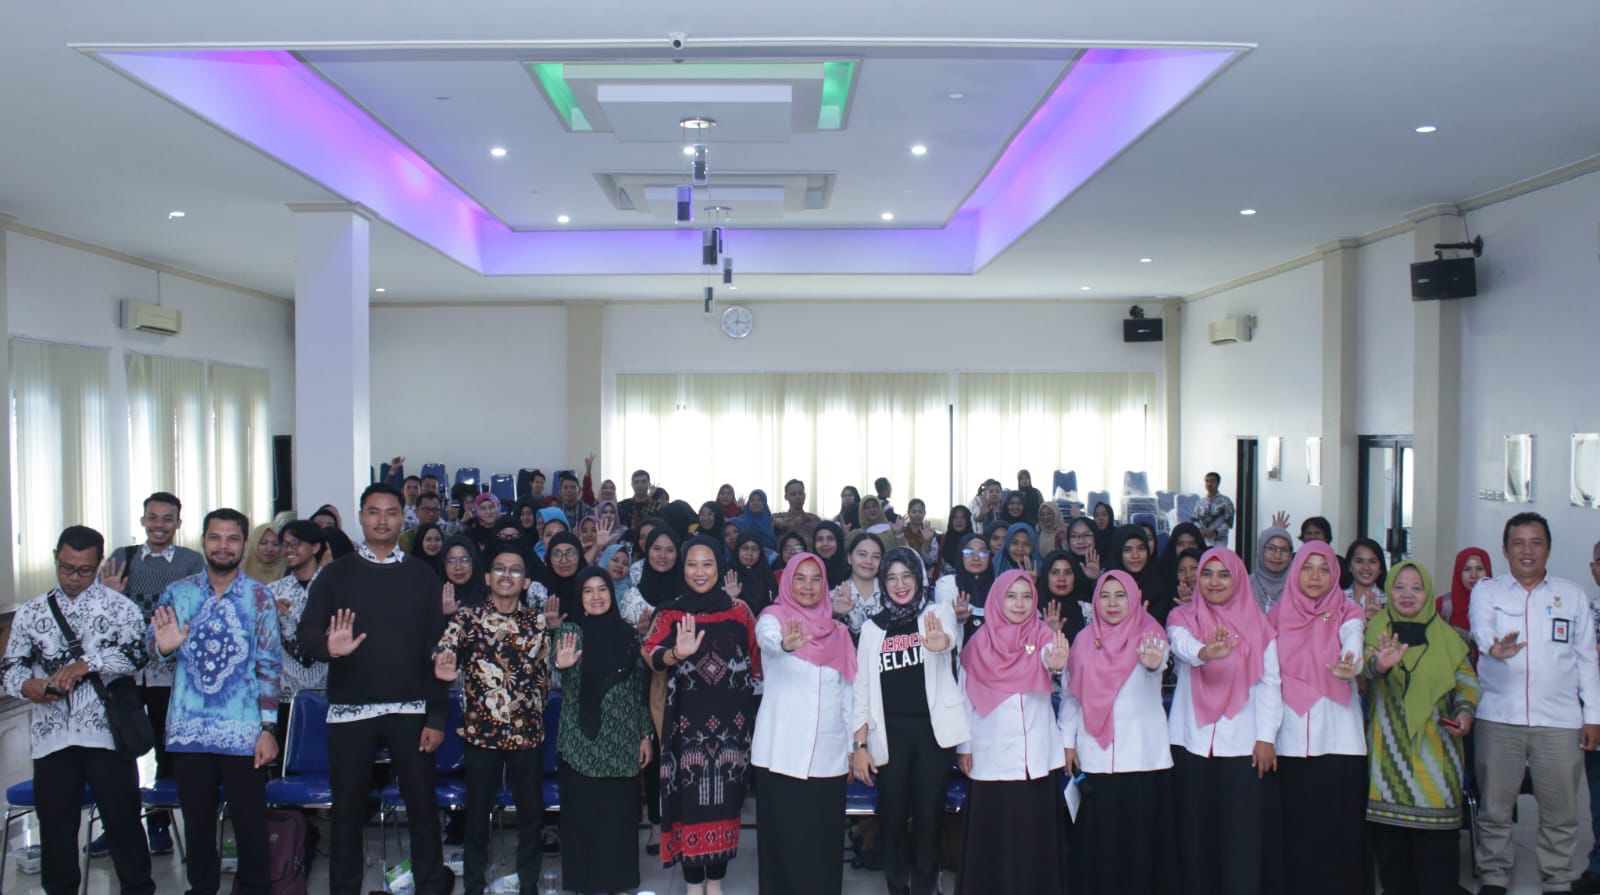 Foto bersama peserta sosialisasi pembentukan satgas pencegahan dan penanganan kekerasan di lingkungan pendidikan, yang digelar oleh KPAD Pontianak. (Foto: Indri)